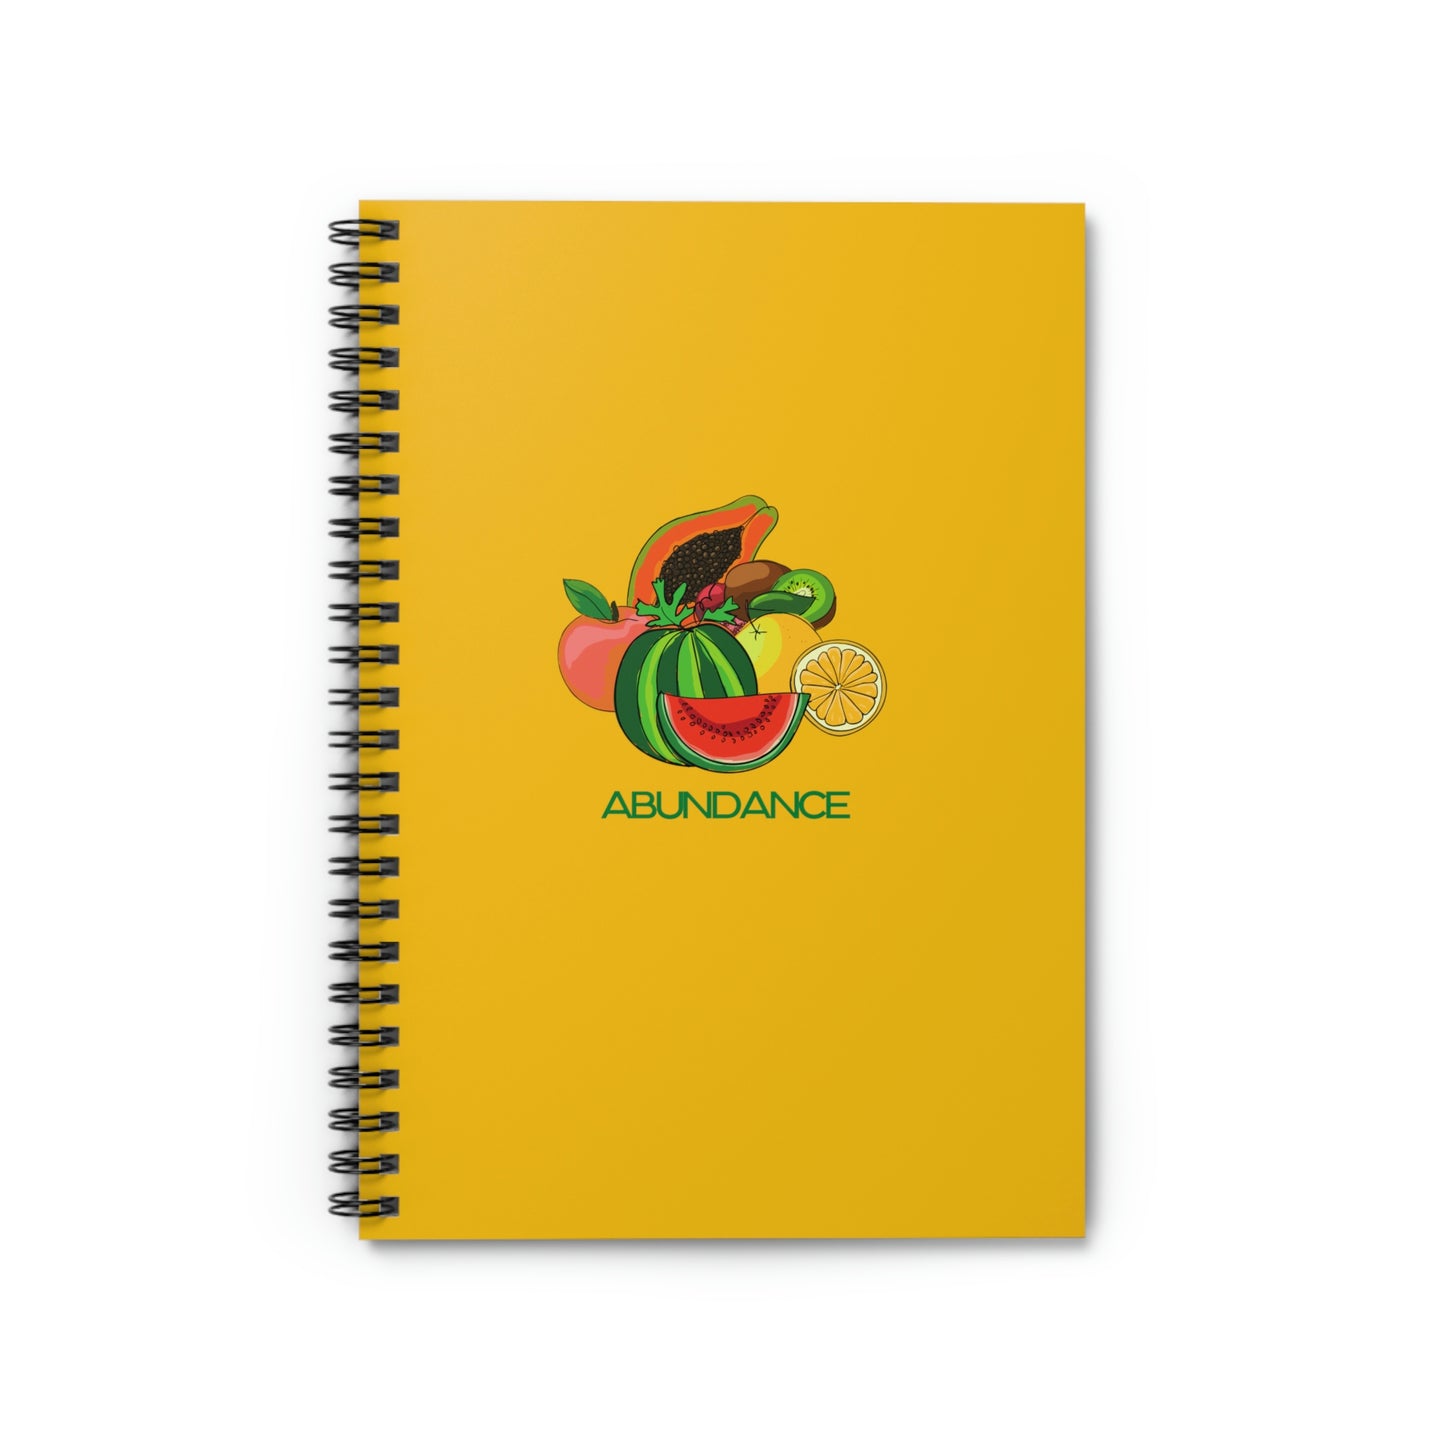 ABUNDANCE - Spiral Notebook - Ruled Line - Yellow Cover